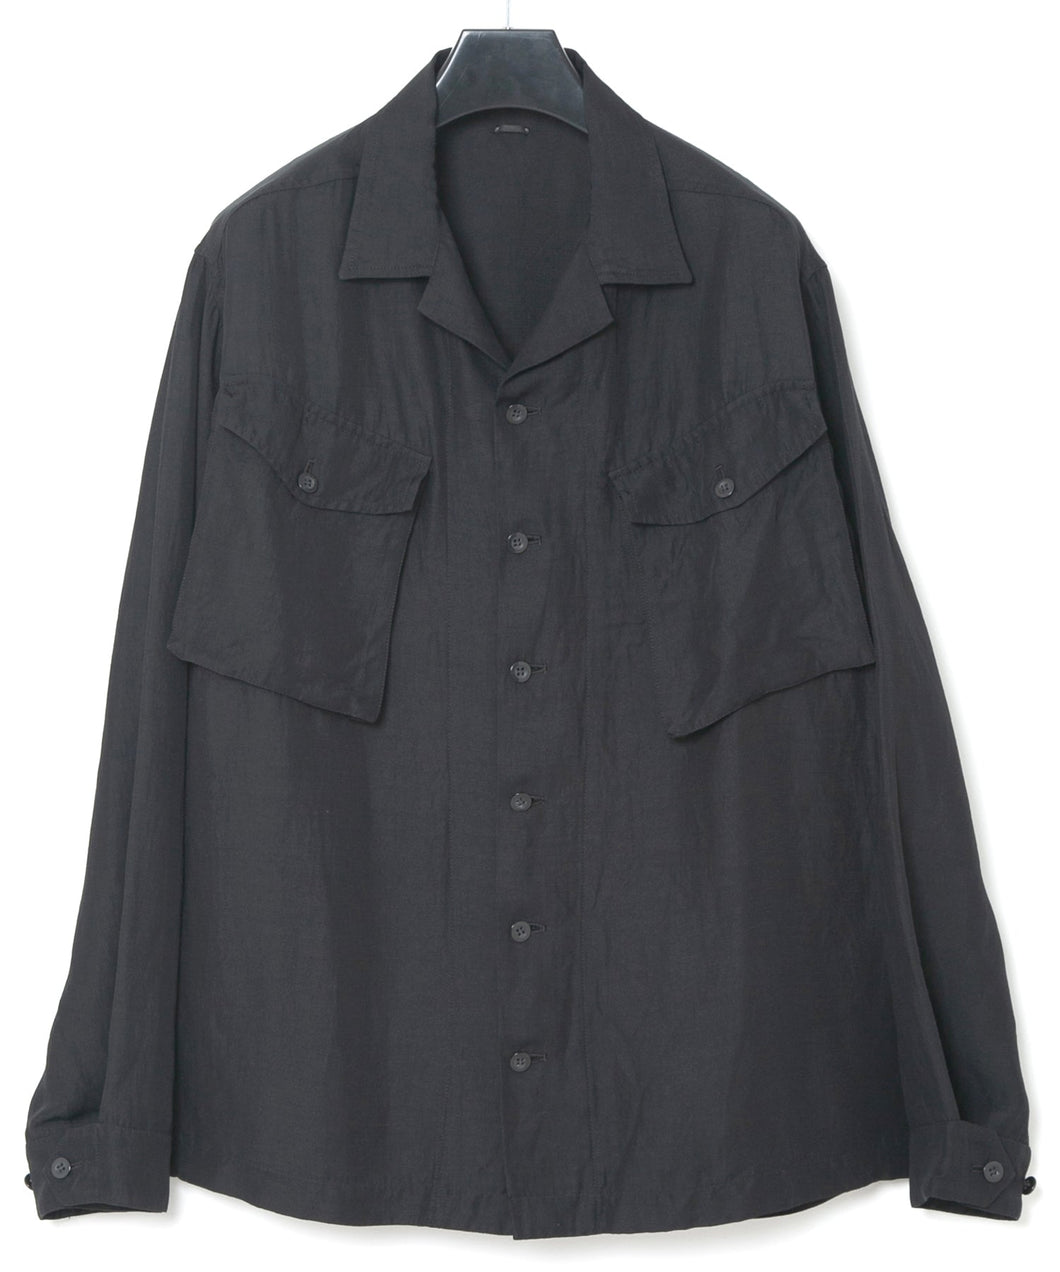 Washer Dyed Rayon&Linen Cloth Military Shirts Blouson - BLACK